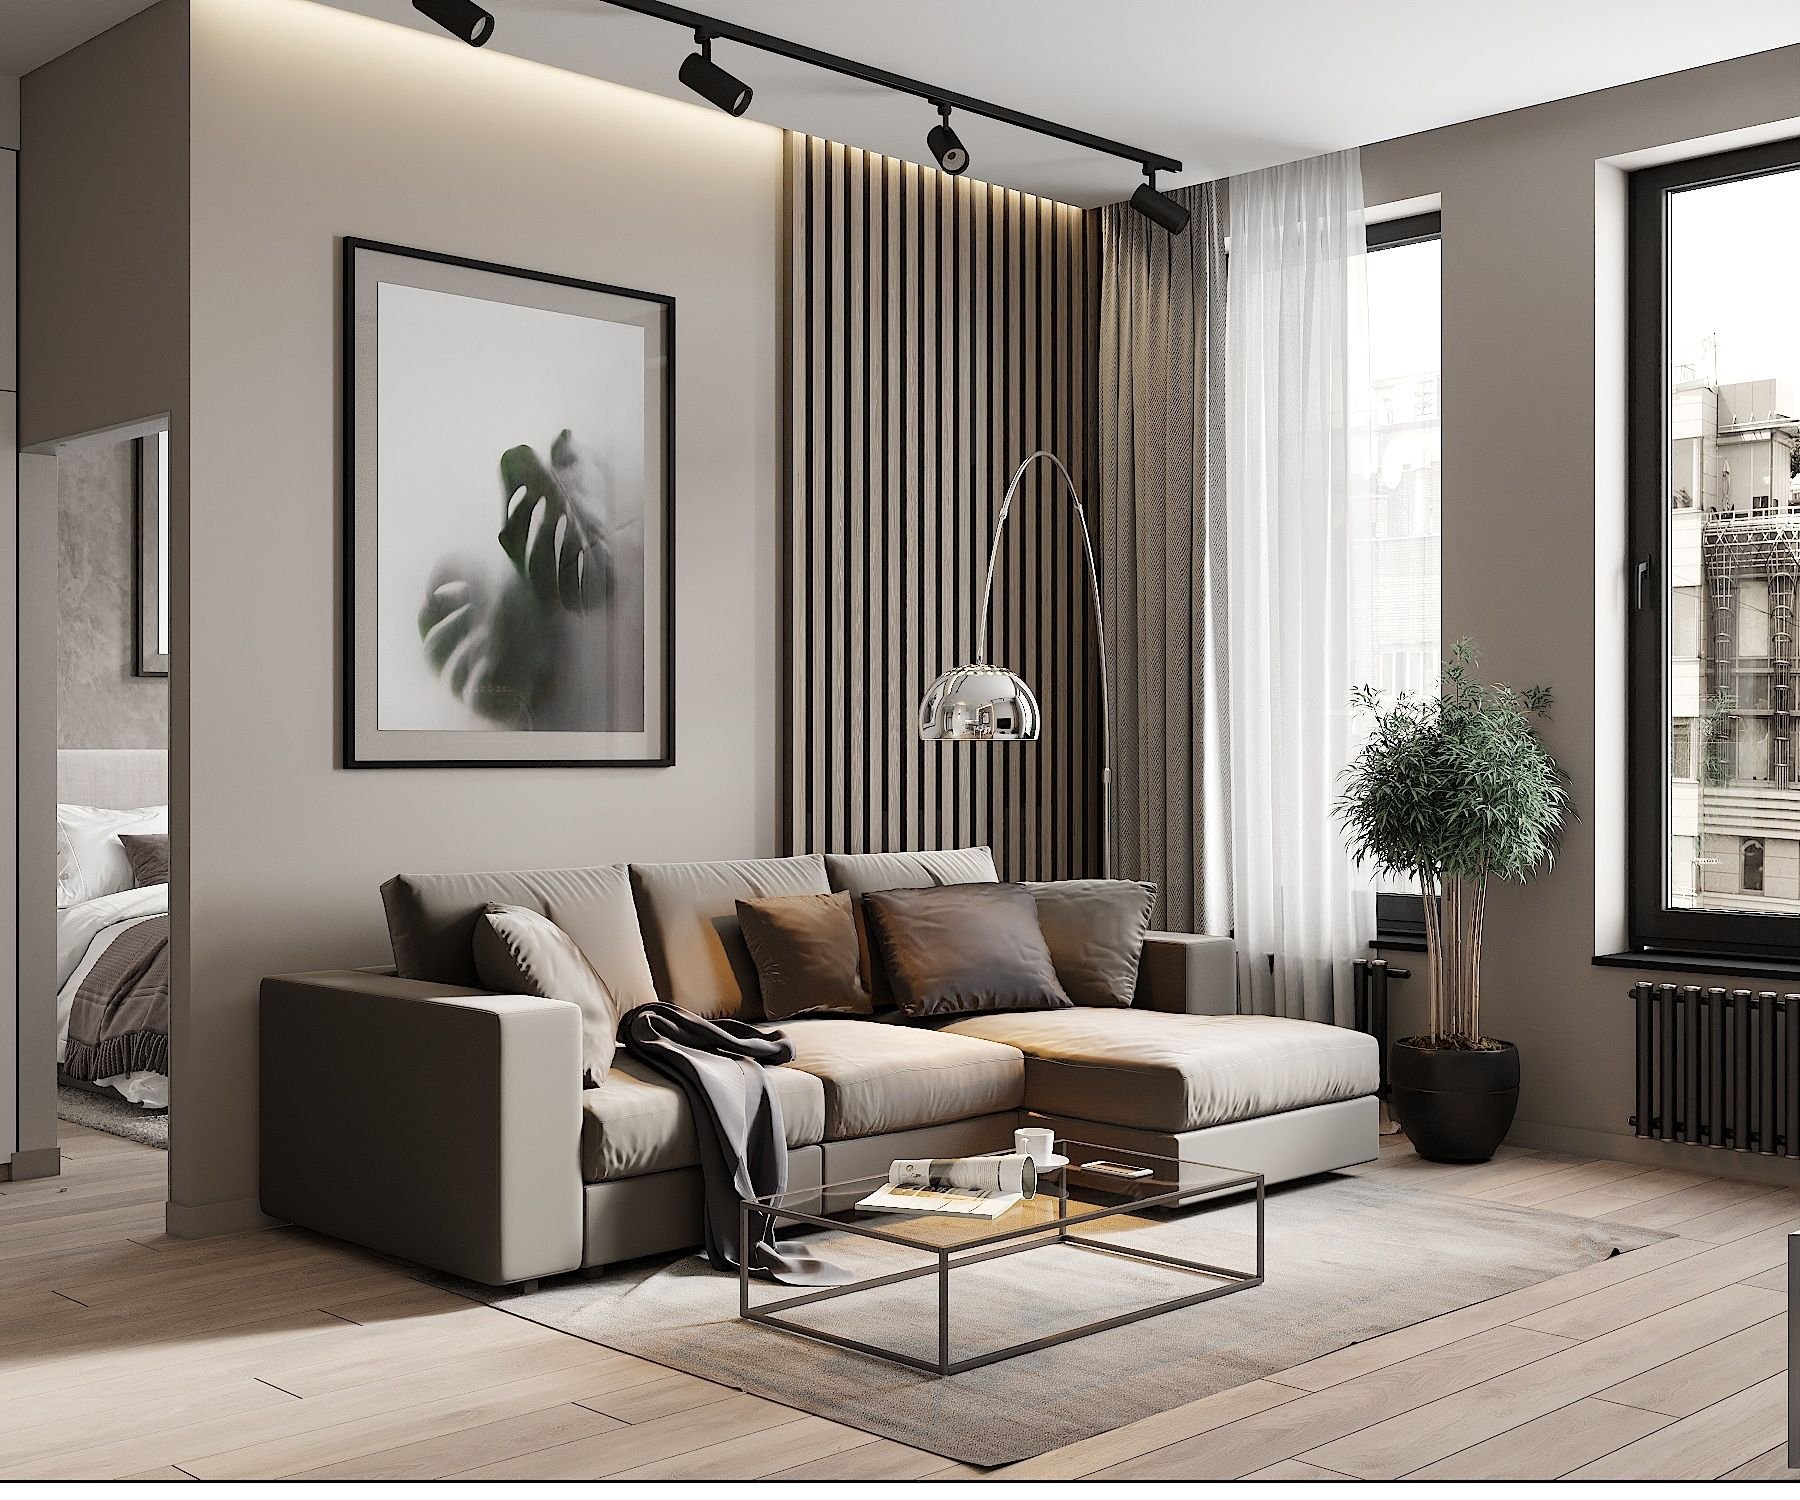 Profile light design for living room - 77 photo